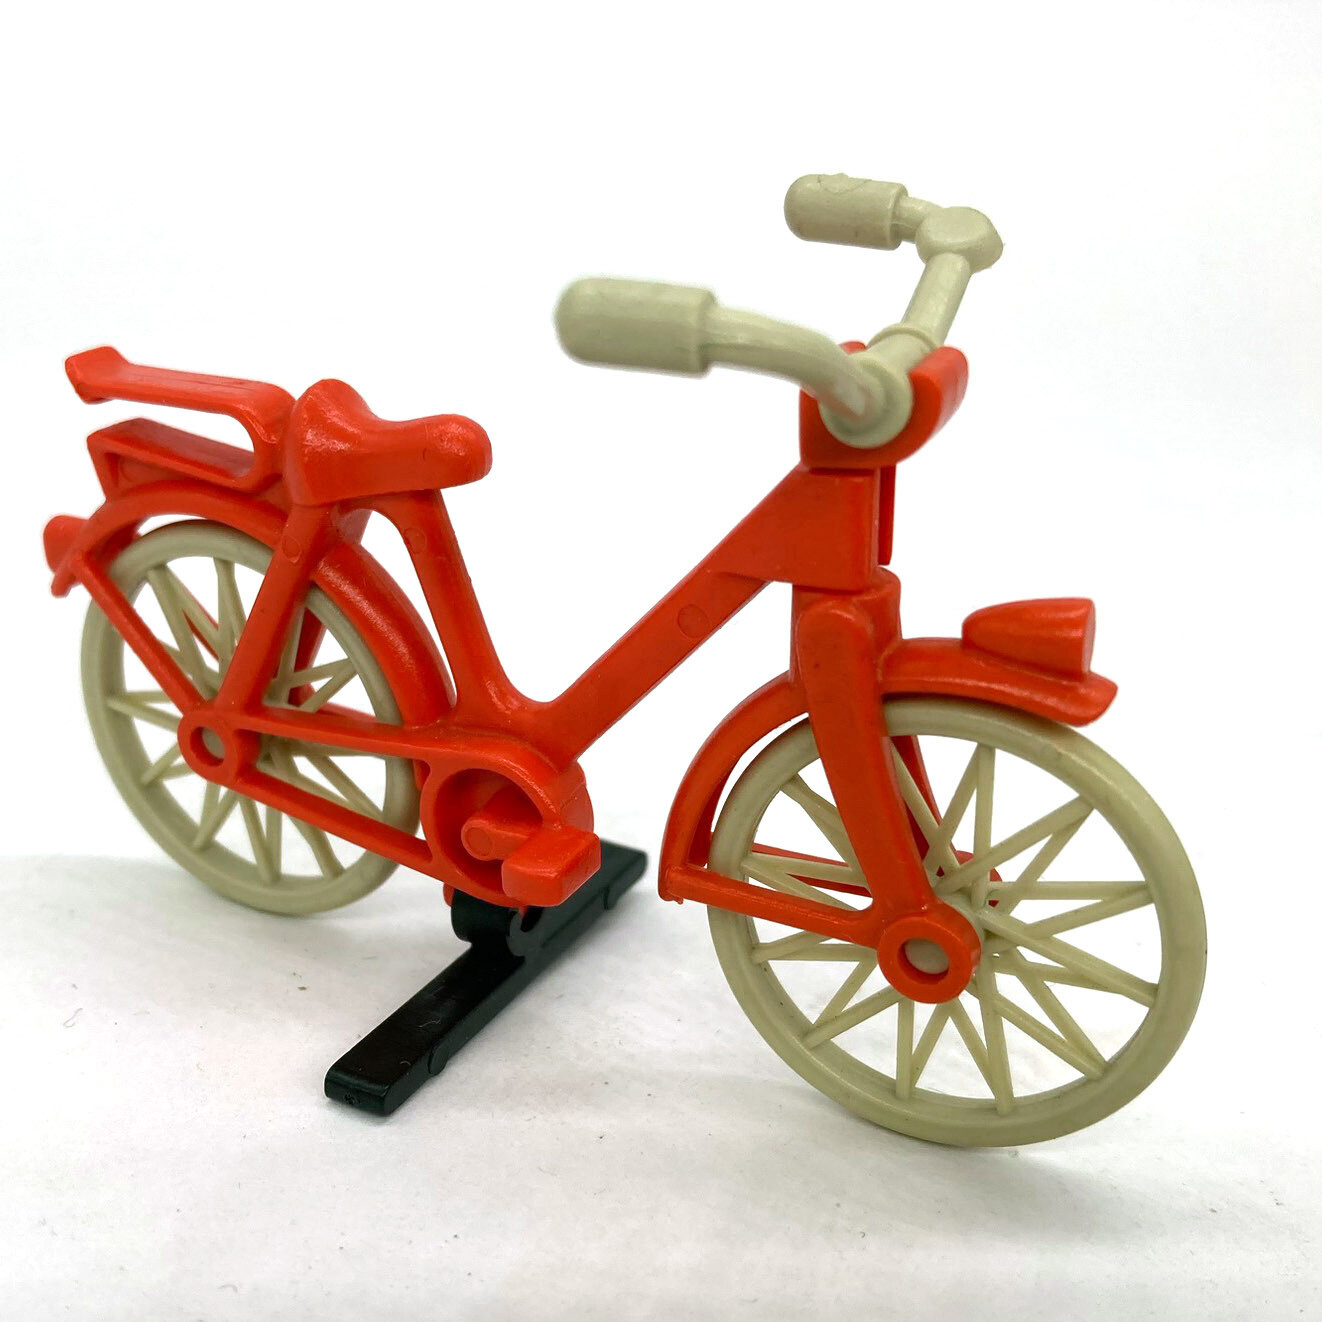 Playmobil courses de vélo